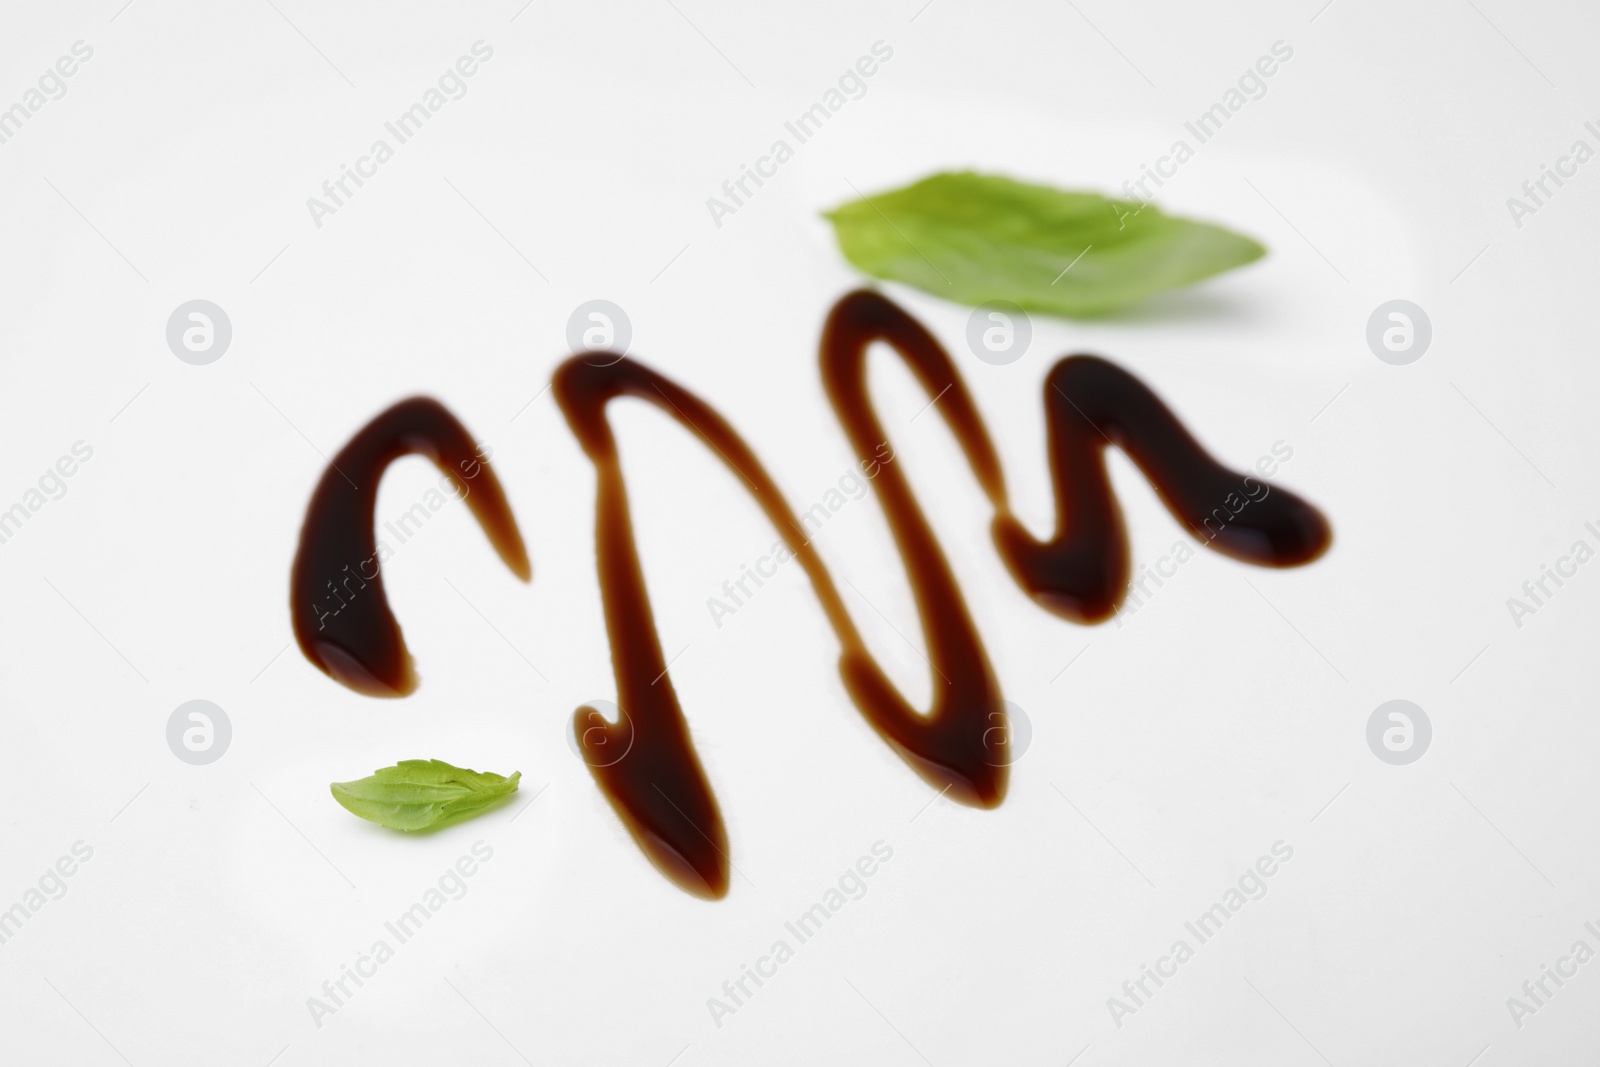 Photo of Organic balsamic vinegar and basil leaves on white background